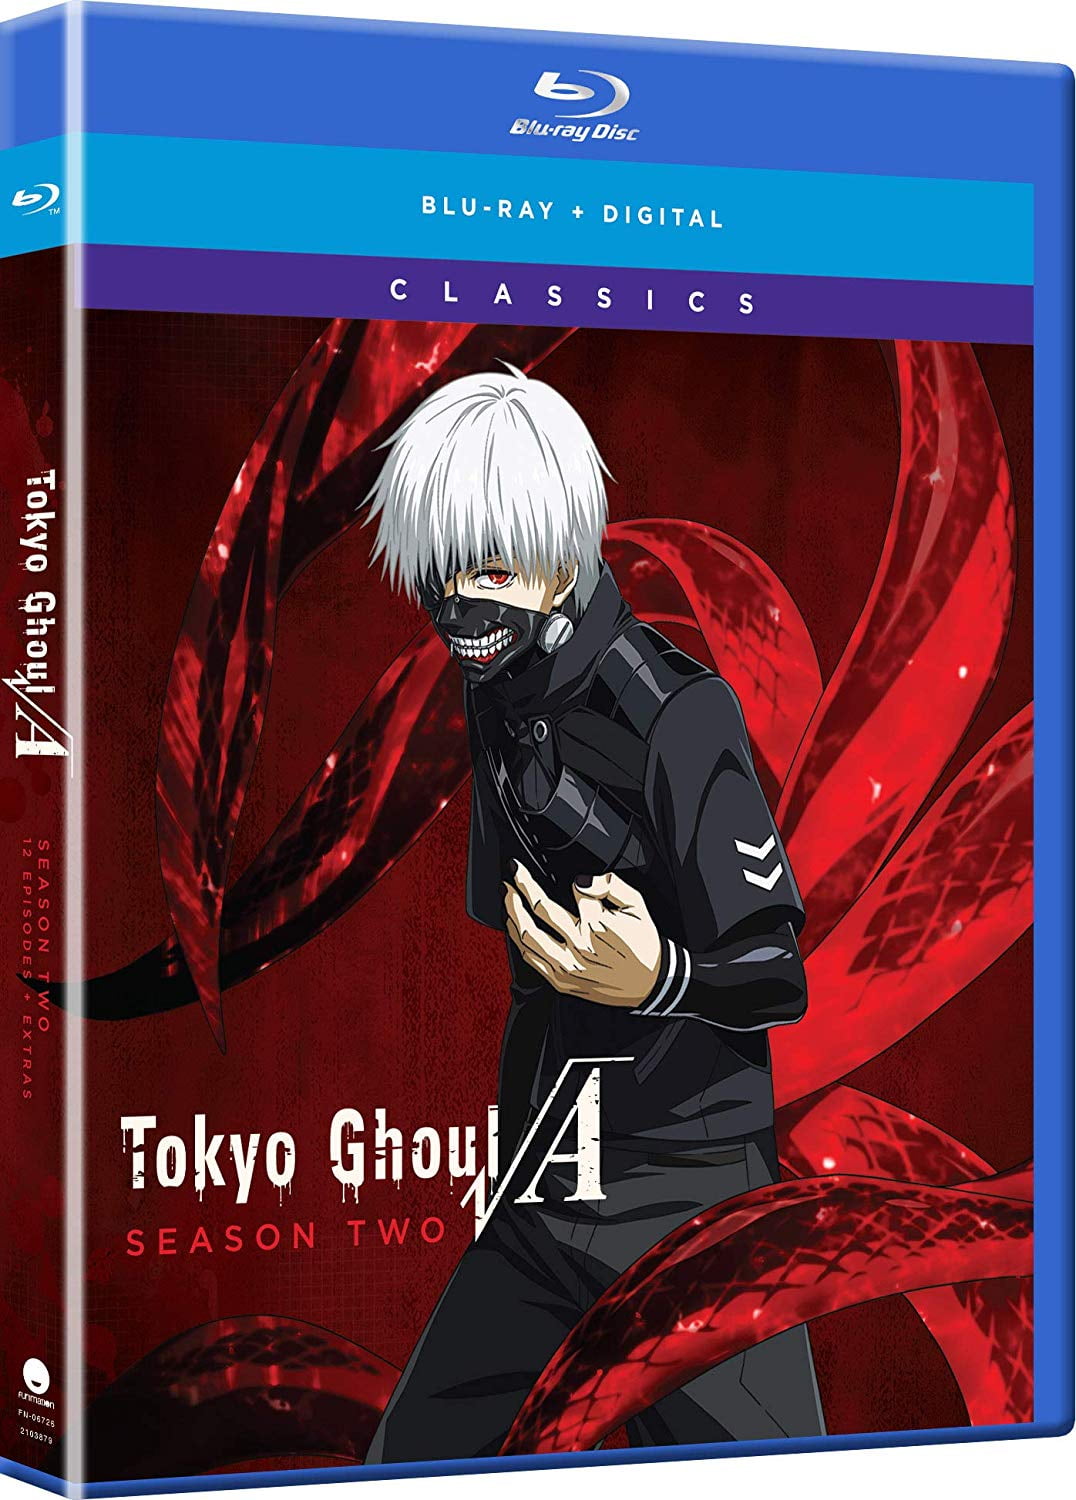 Universal Tokyo Ghoul VA: The Complete Second Season (Blu-ray + Digital Copy)